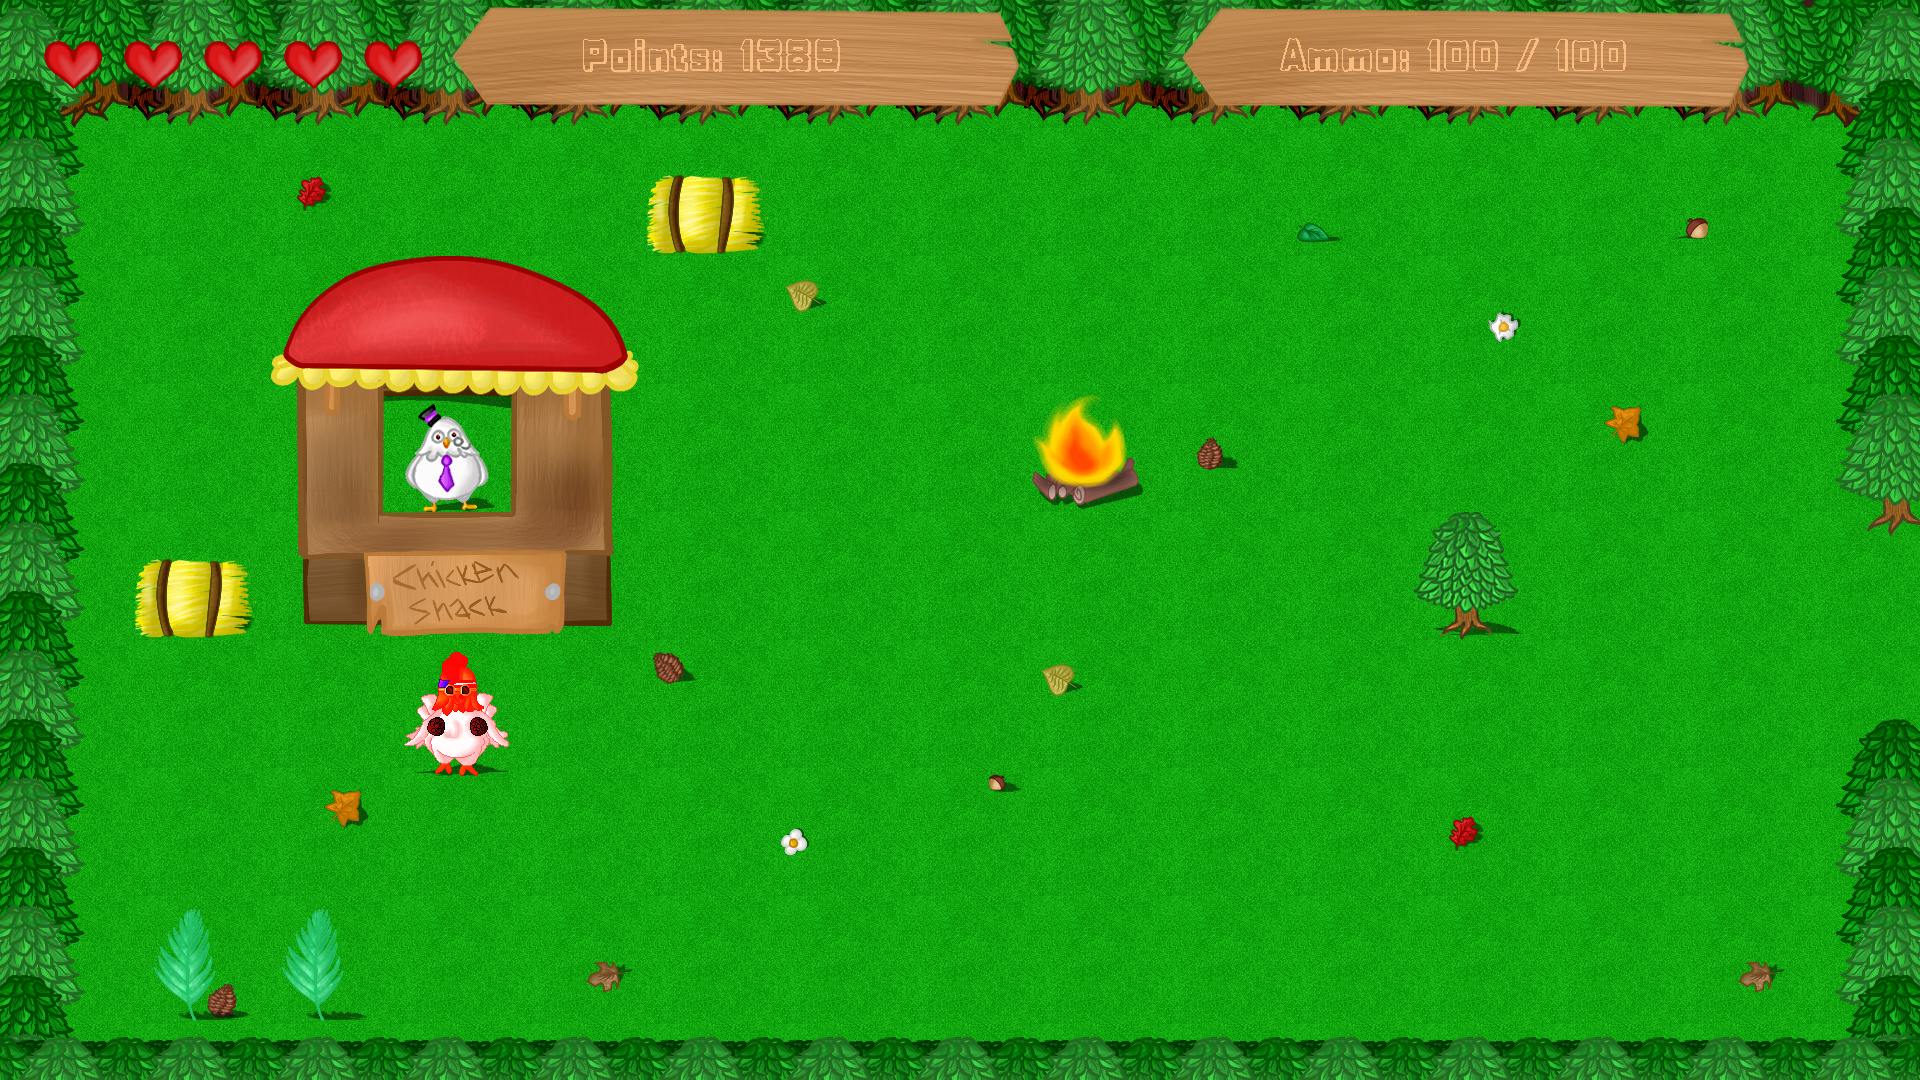 Chicken with Chainguns screenshot